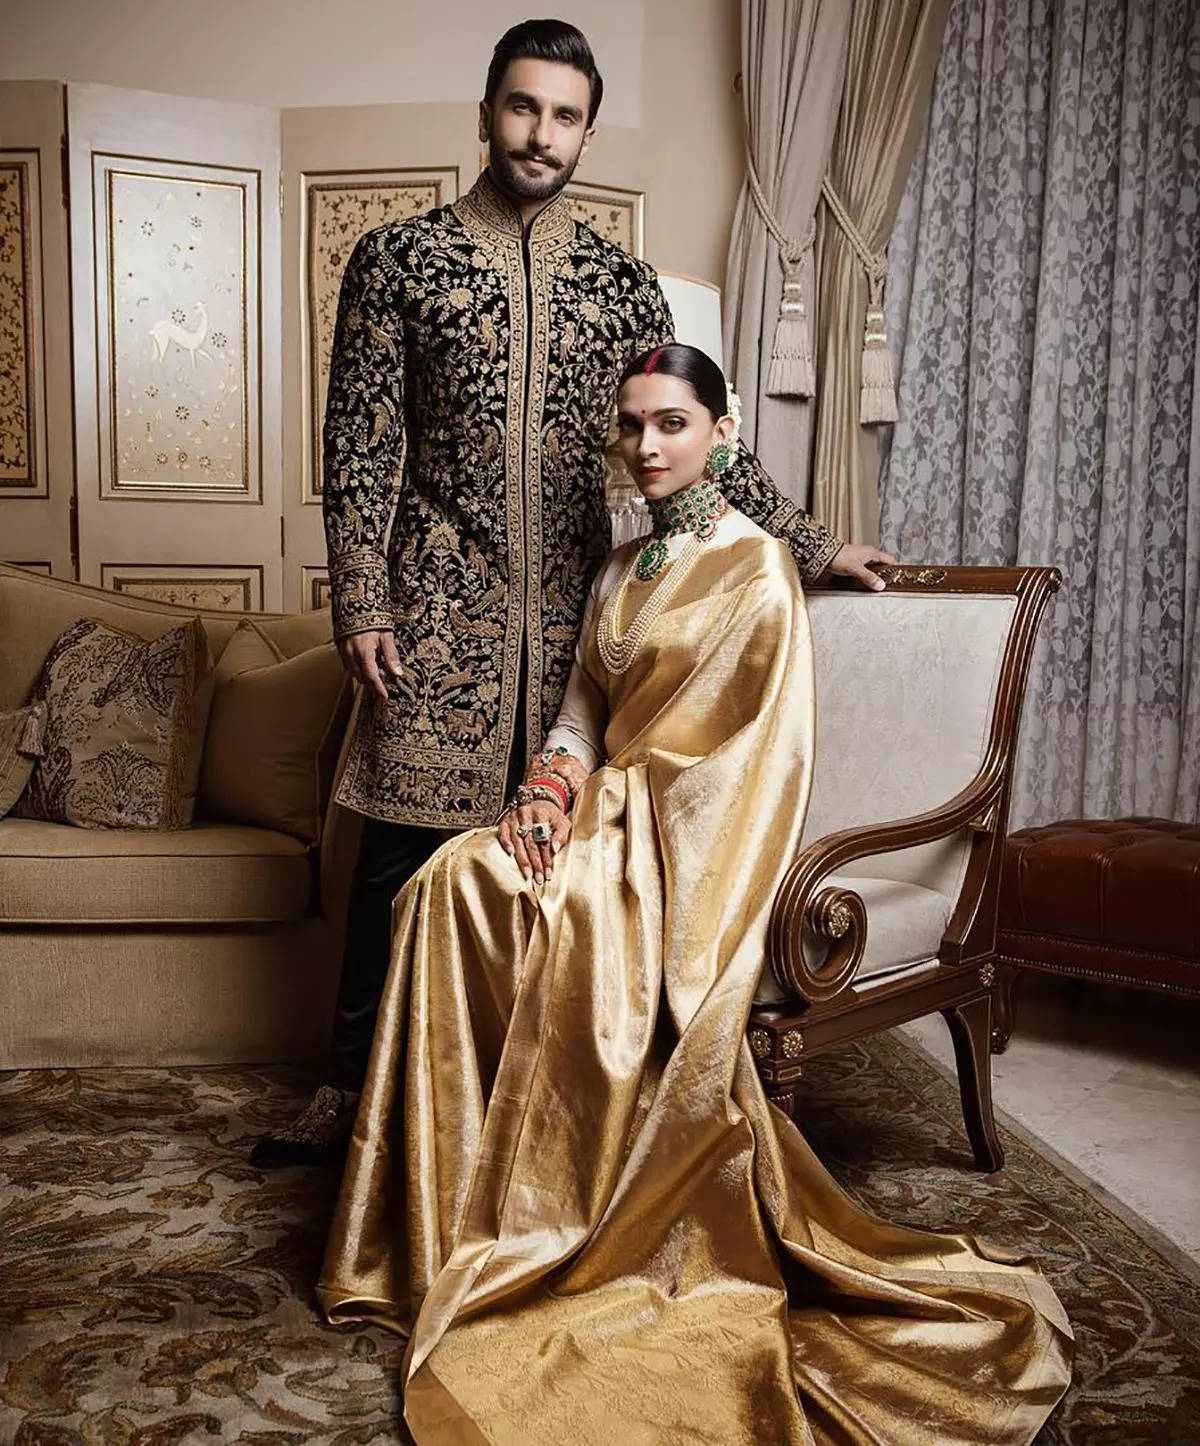 ​Bollywood stars Ranveer Singh and Deepika Padukone shine brightest together​